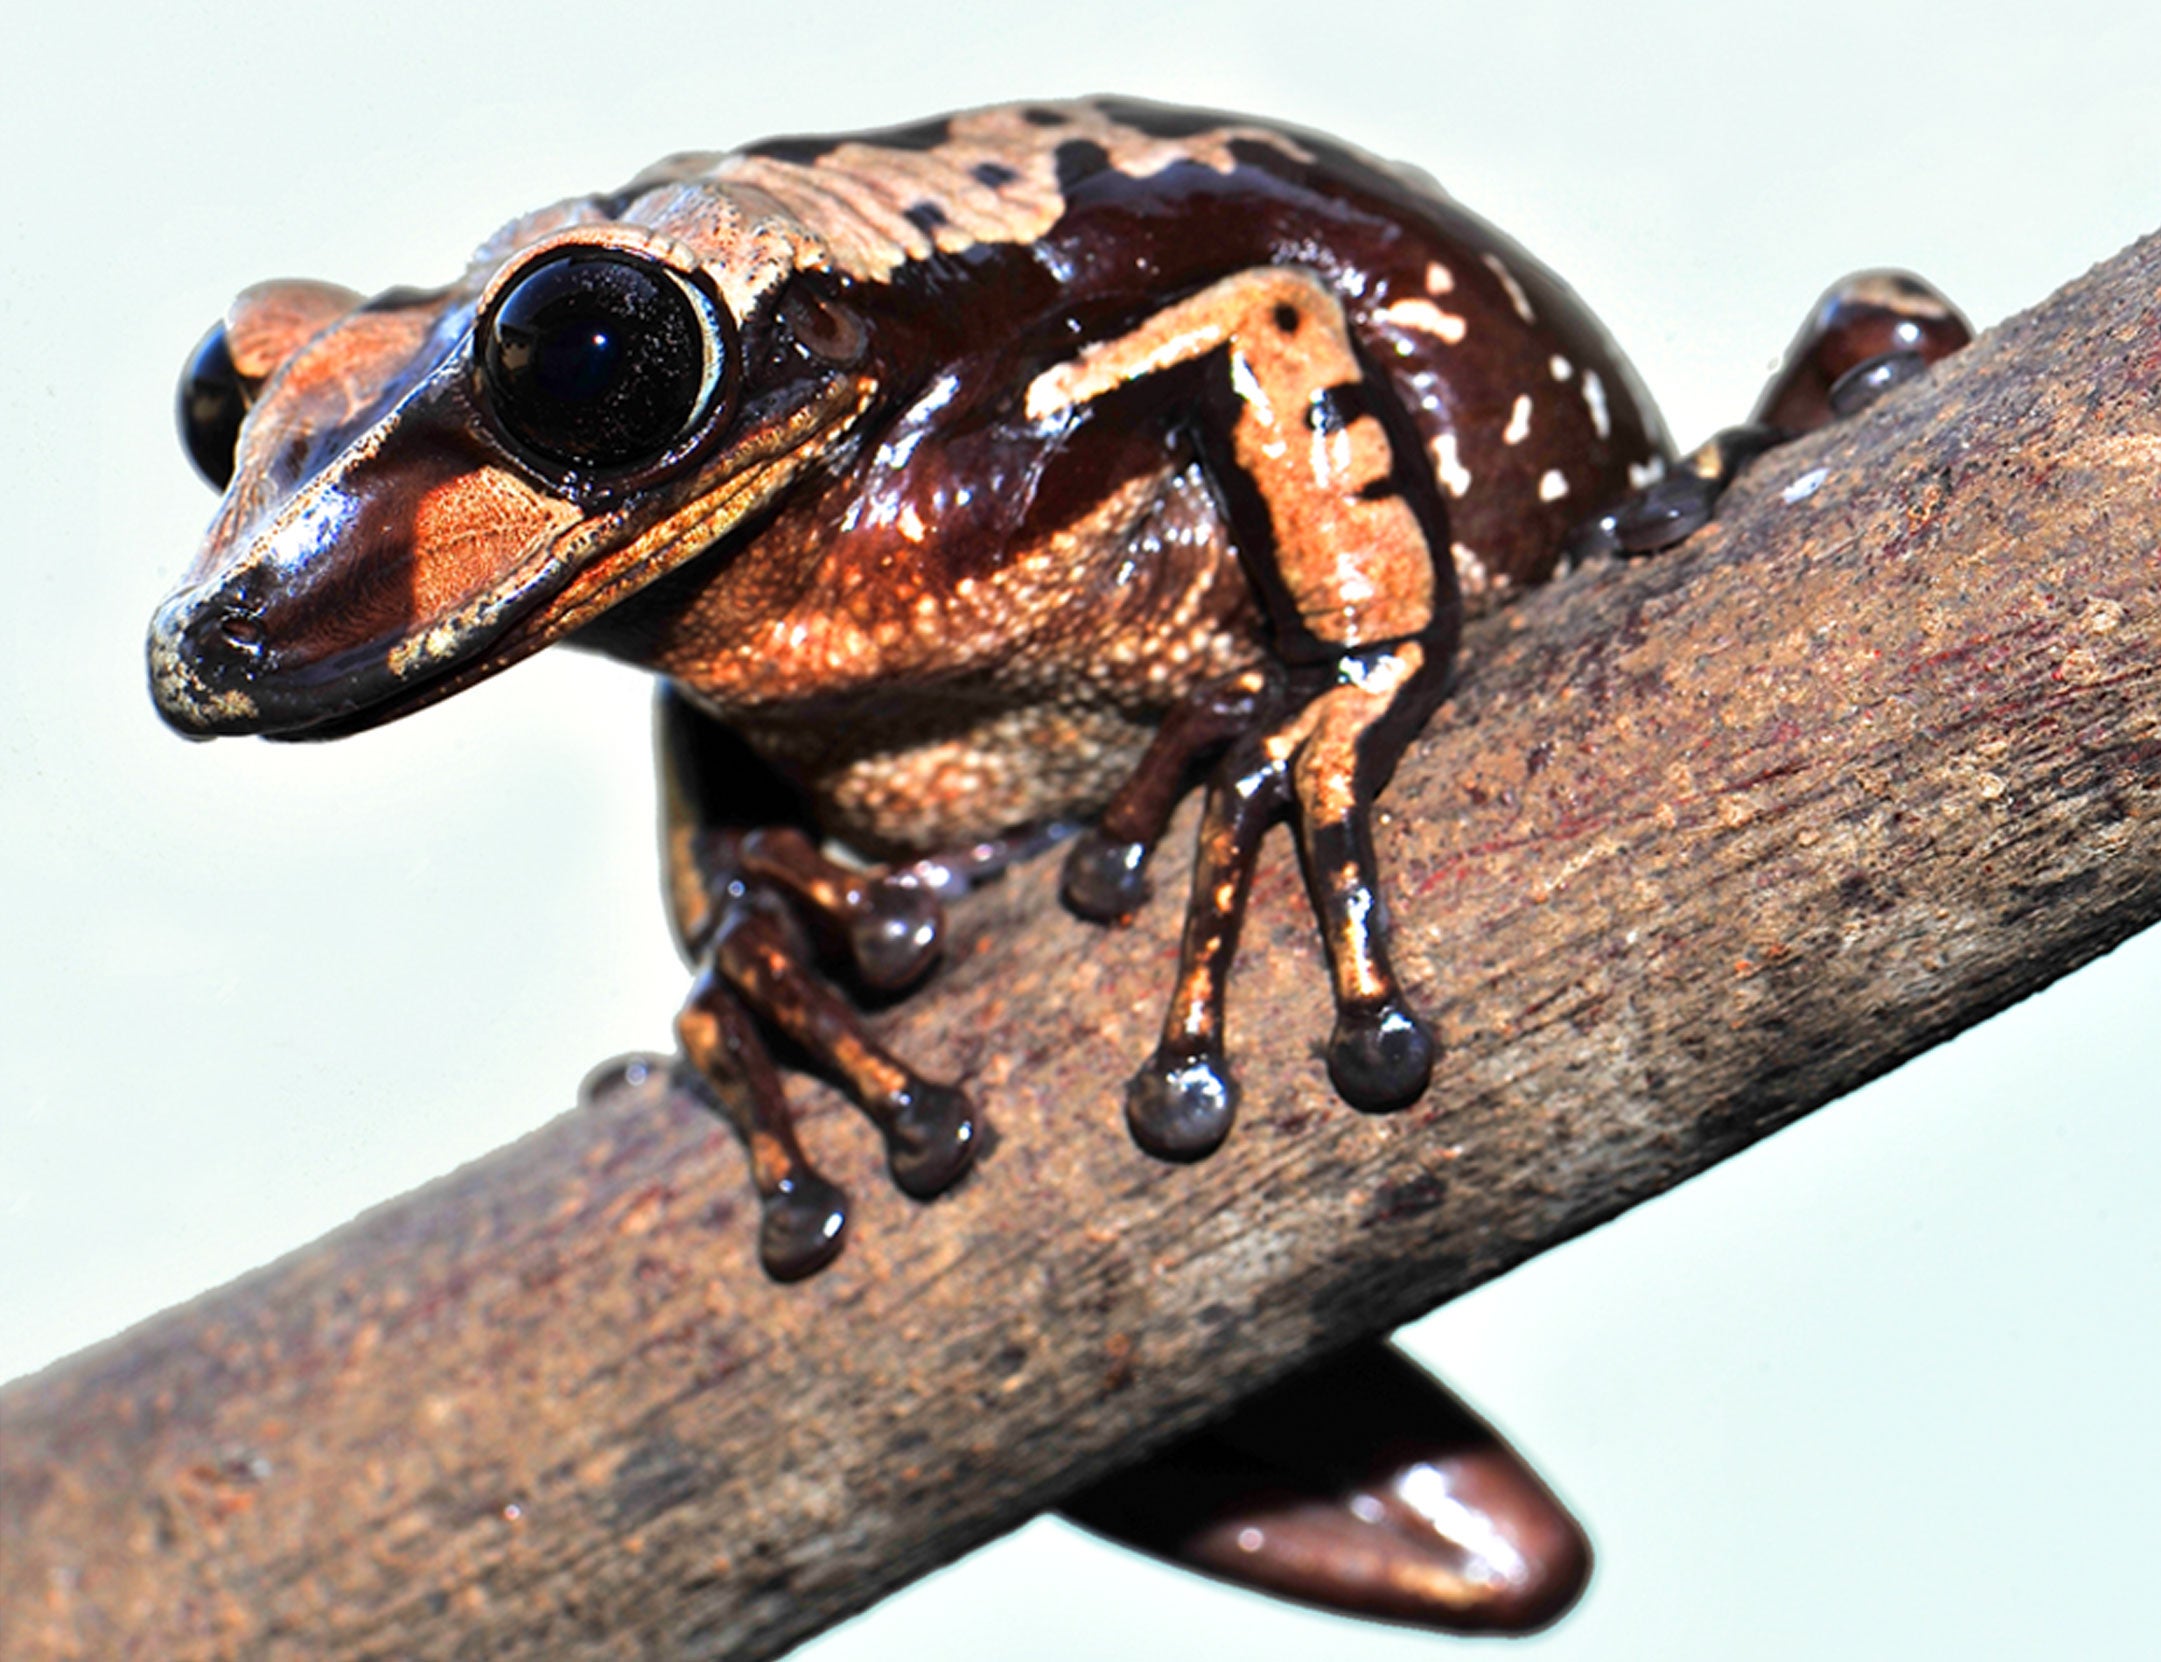 An Aparasphenodon brunoi (Bruno's Casque-headed Frog). (Carlos Jared/Butantan Institute)